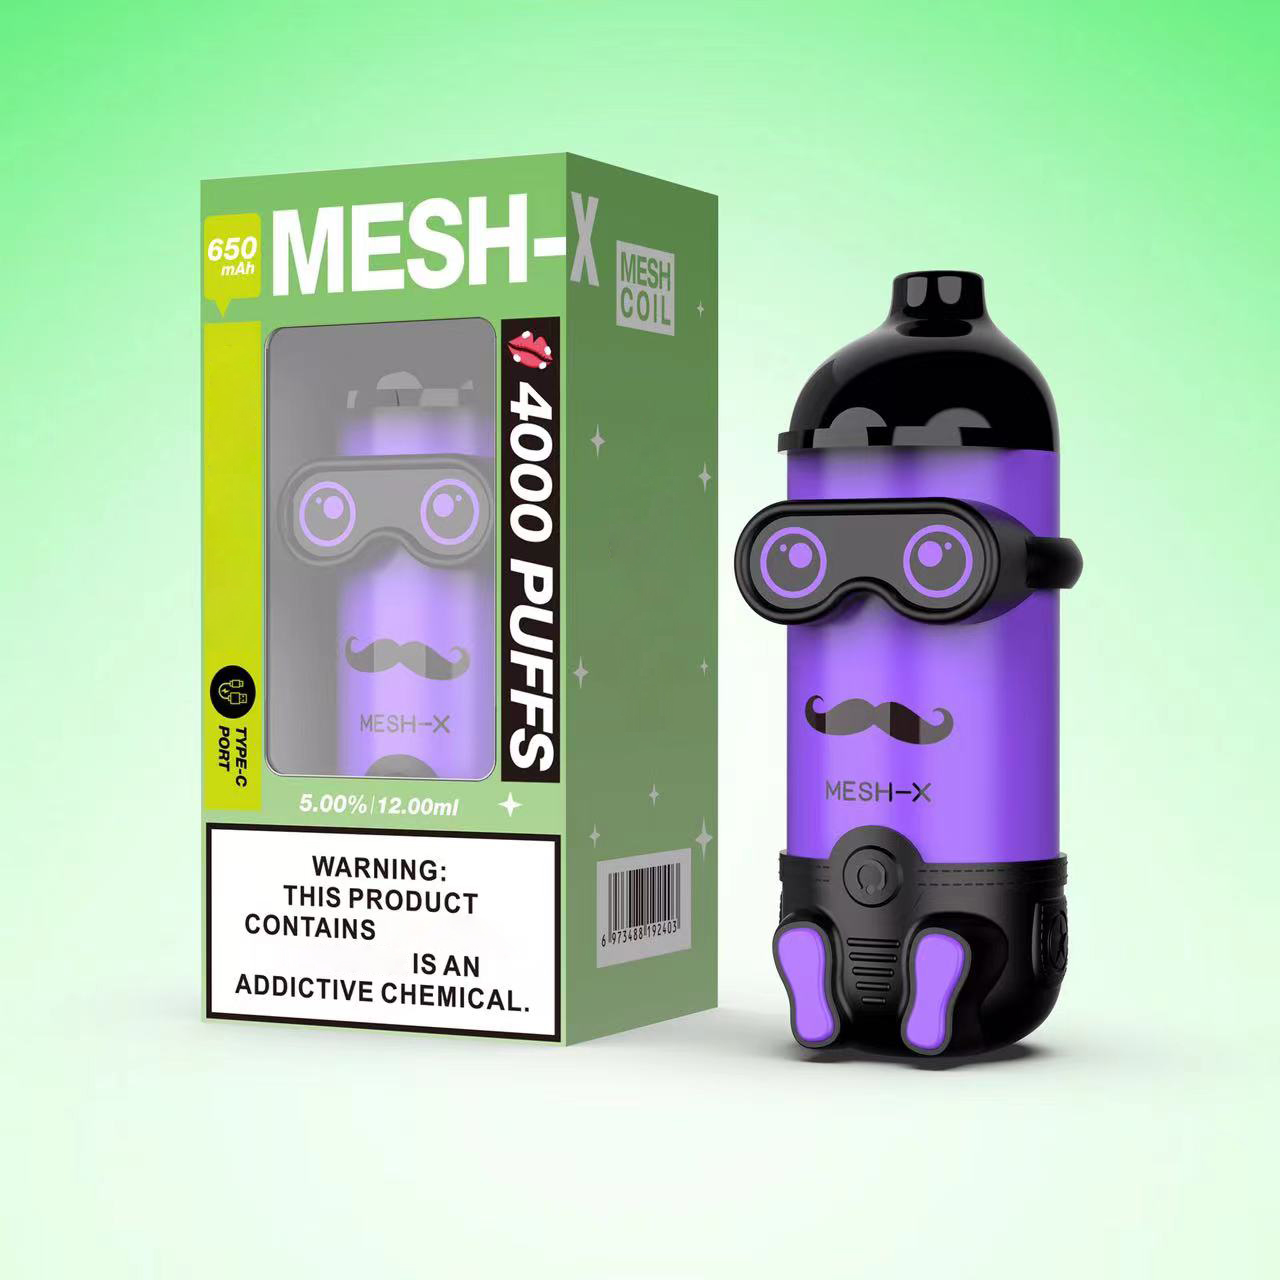 

Authentic MESHKING MESH-X Disposable E cigarettes Minions Cartoon Design 4000 Puffs Vape Pen 12ml Pre-filled Mesh Coil Pods Vaporizers 650mAh Rechargeable Battery